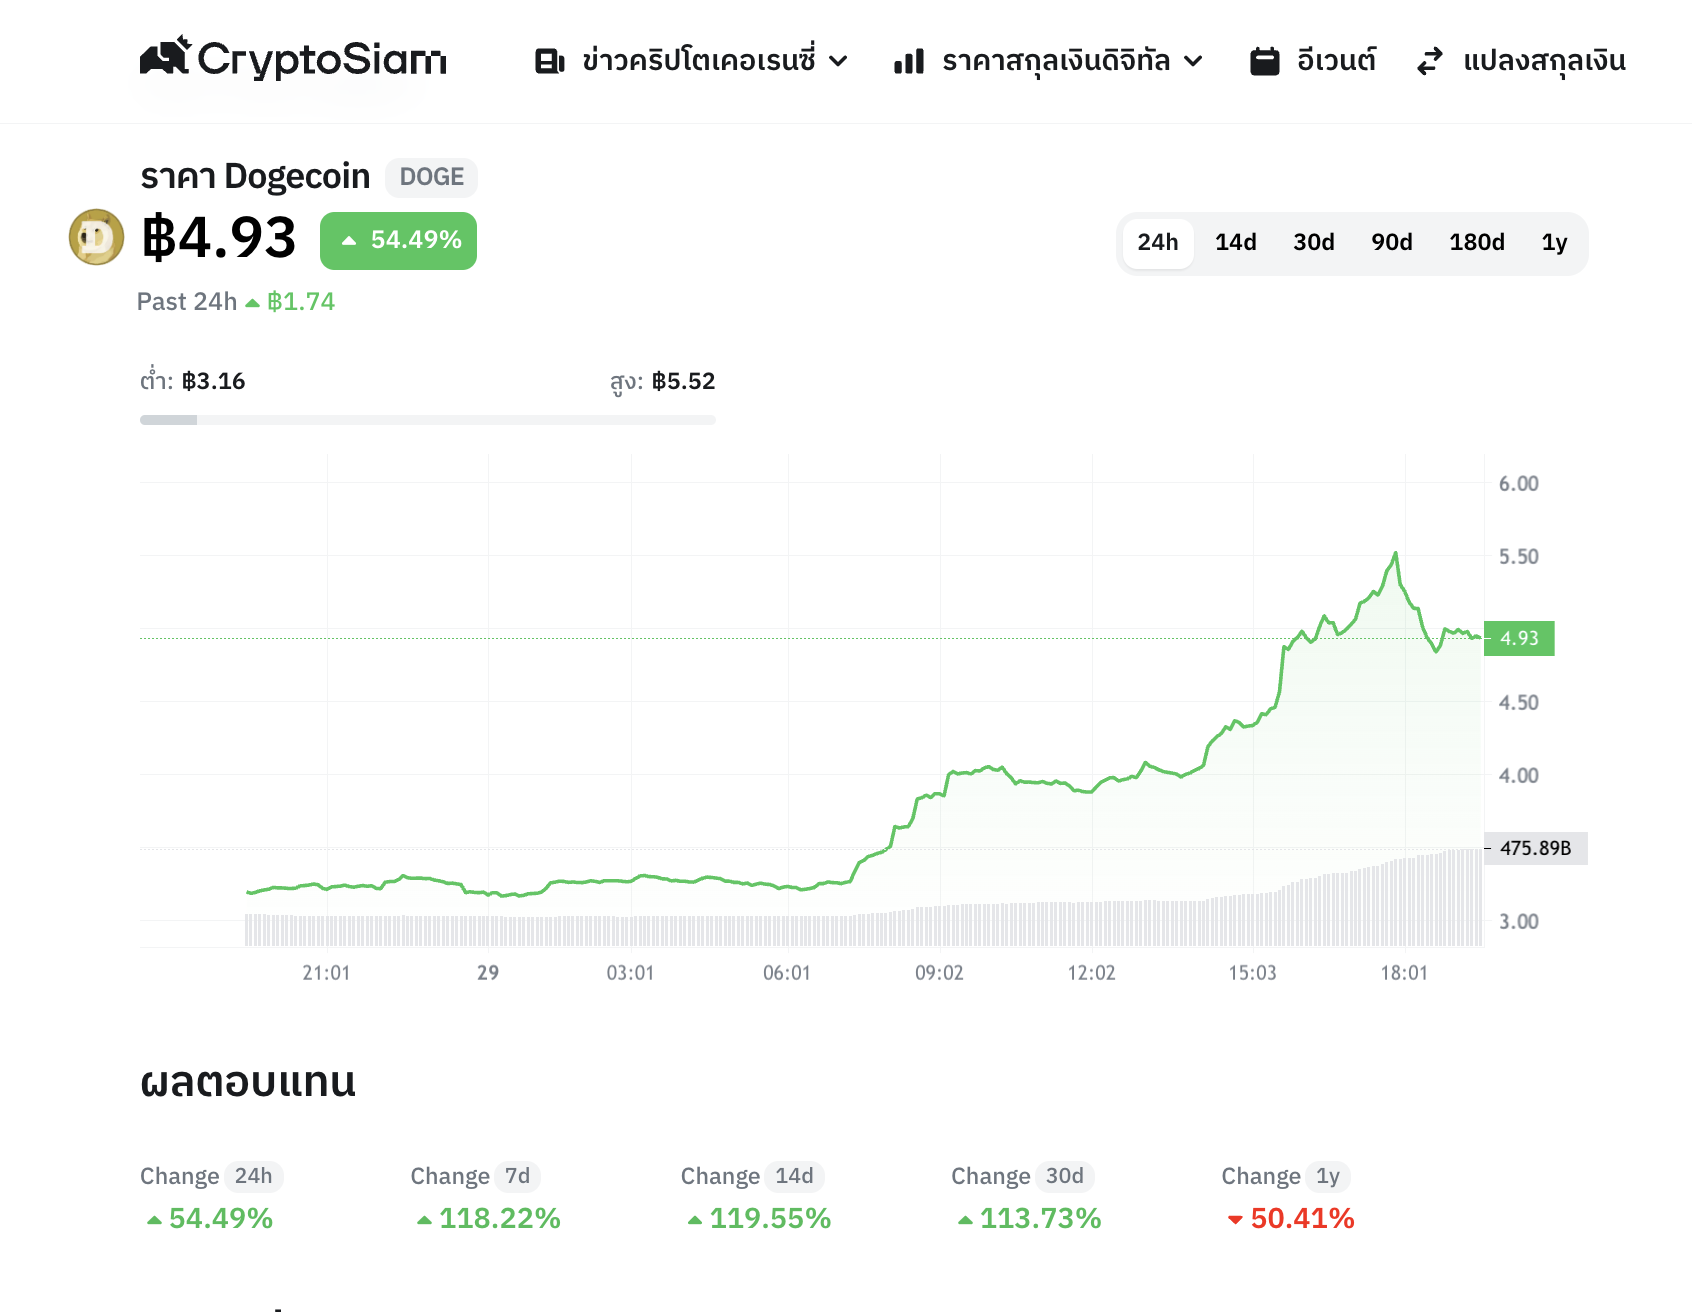 <i>กราฟราคา Dogecoin และข้อมูลการเปลี่ยนแปลงราคา<br>รูปภาพ: CryptoSiam</i>